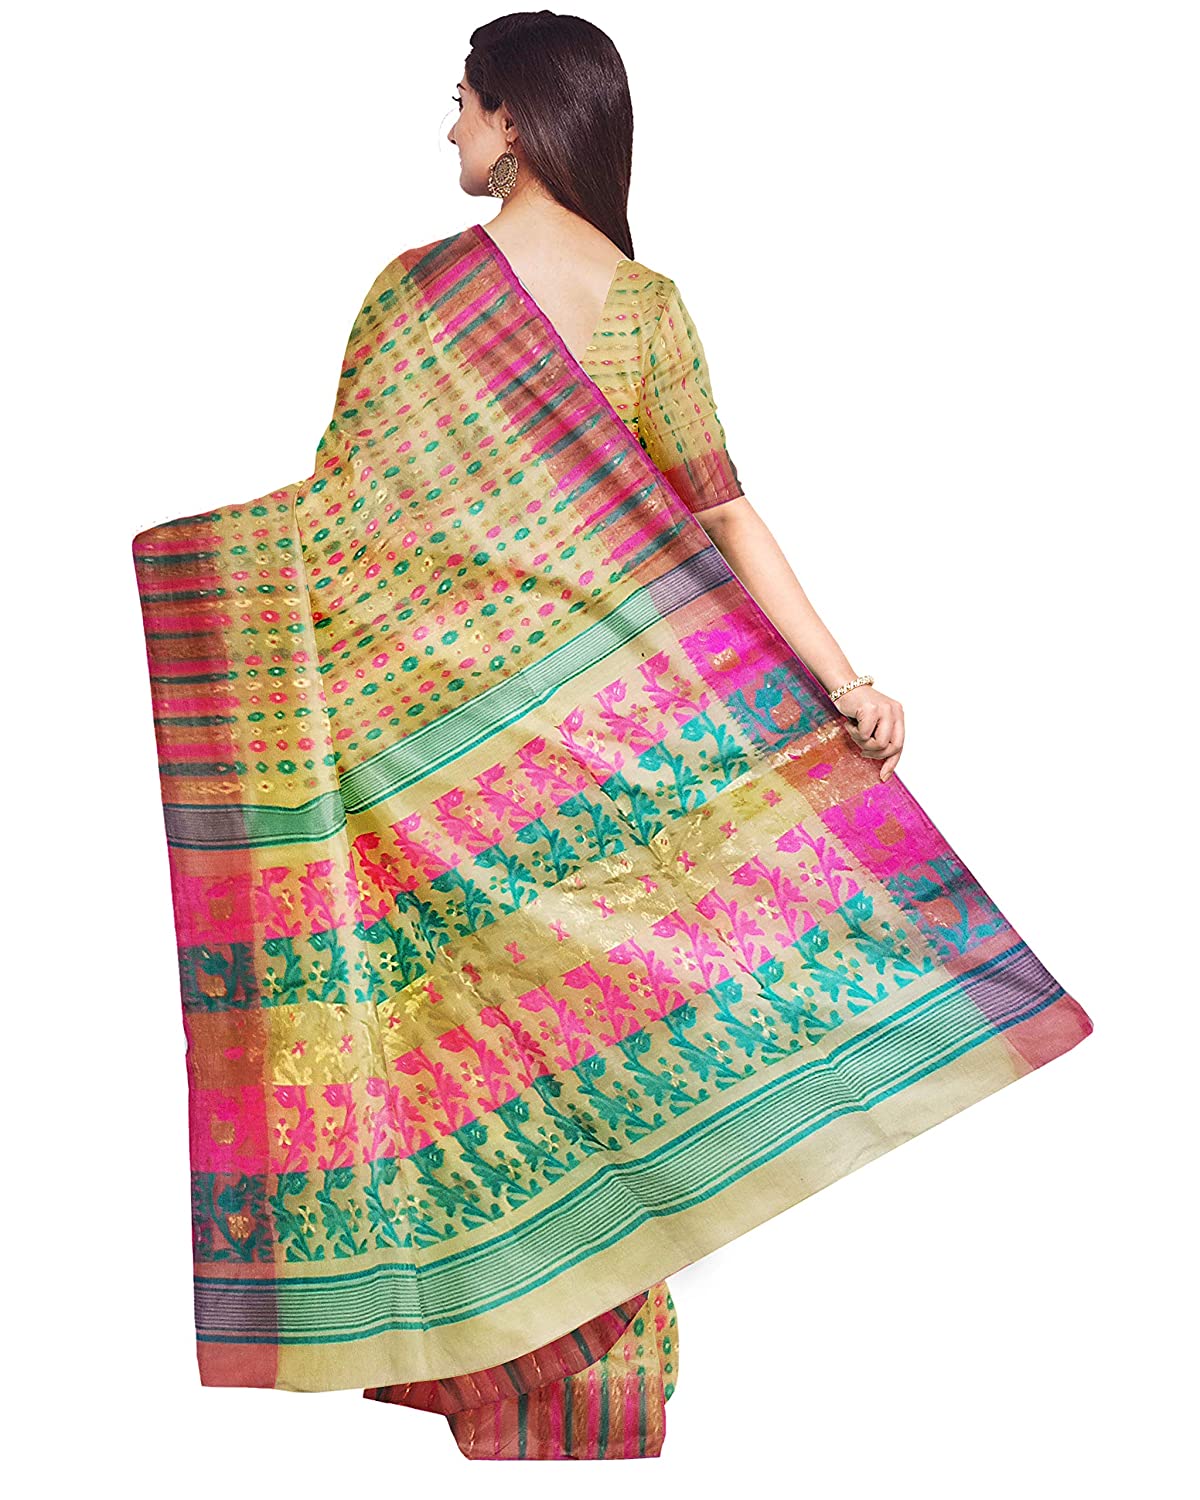 Pradip Fabrics Ethnic Women's Tant Jamdani Beige Color Saree